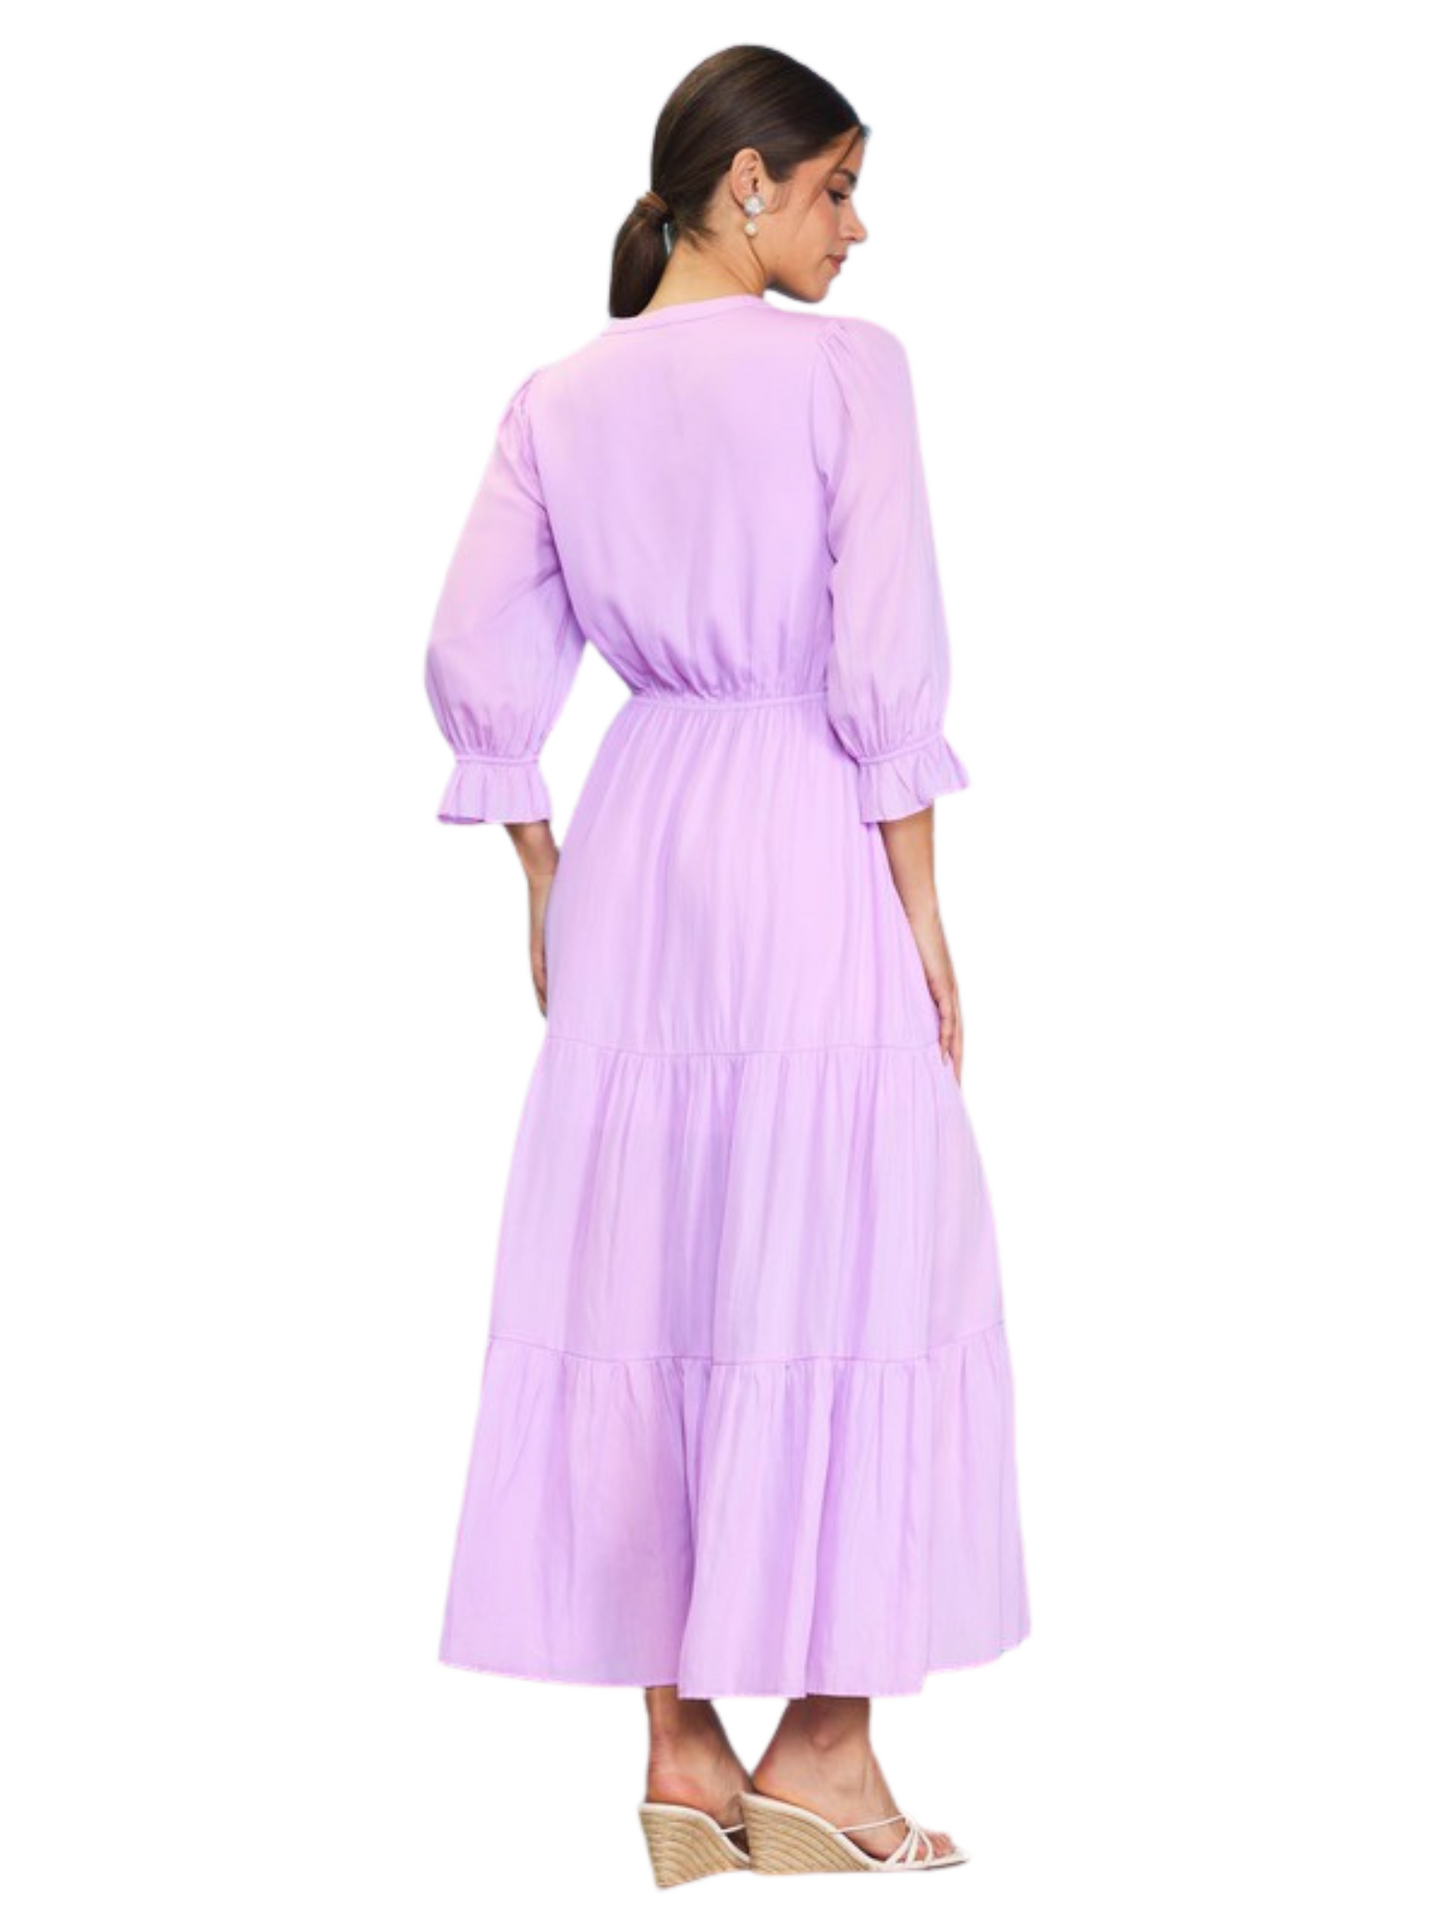 Marabella Dress - Lilac